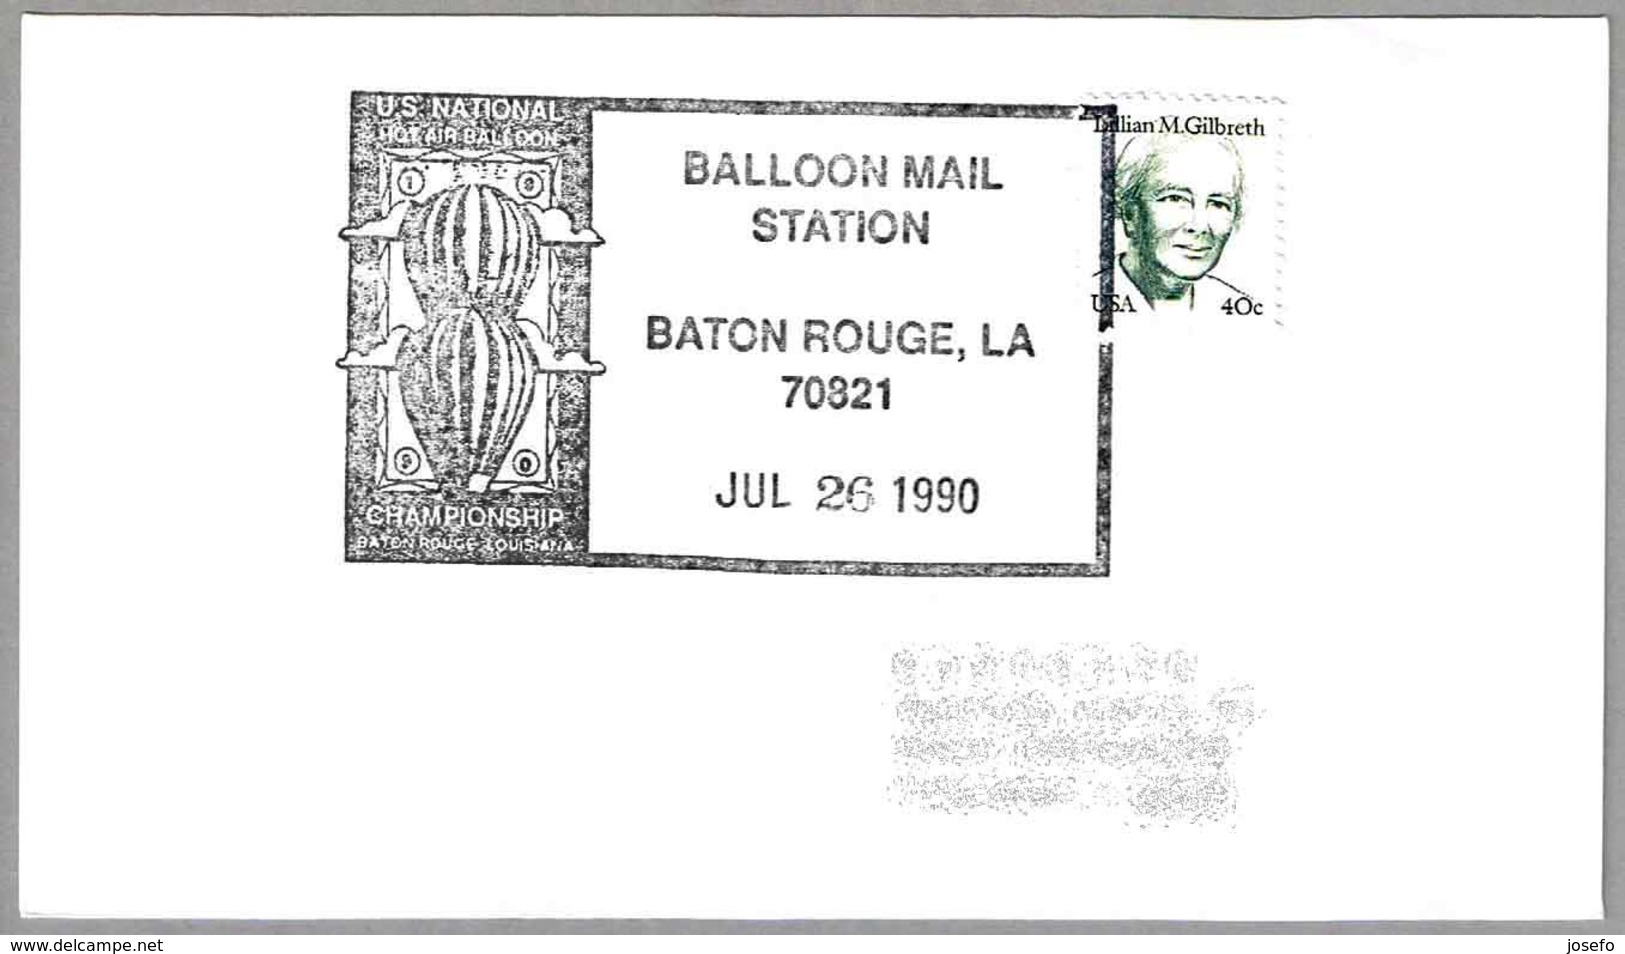 U.S. NATIONAL HOT AIR BALLOON CHAMPIONSHIP. Baton Rouge LA 1990 - Montgolfier